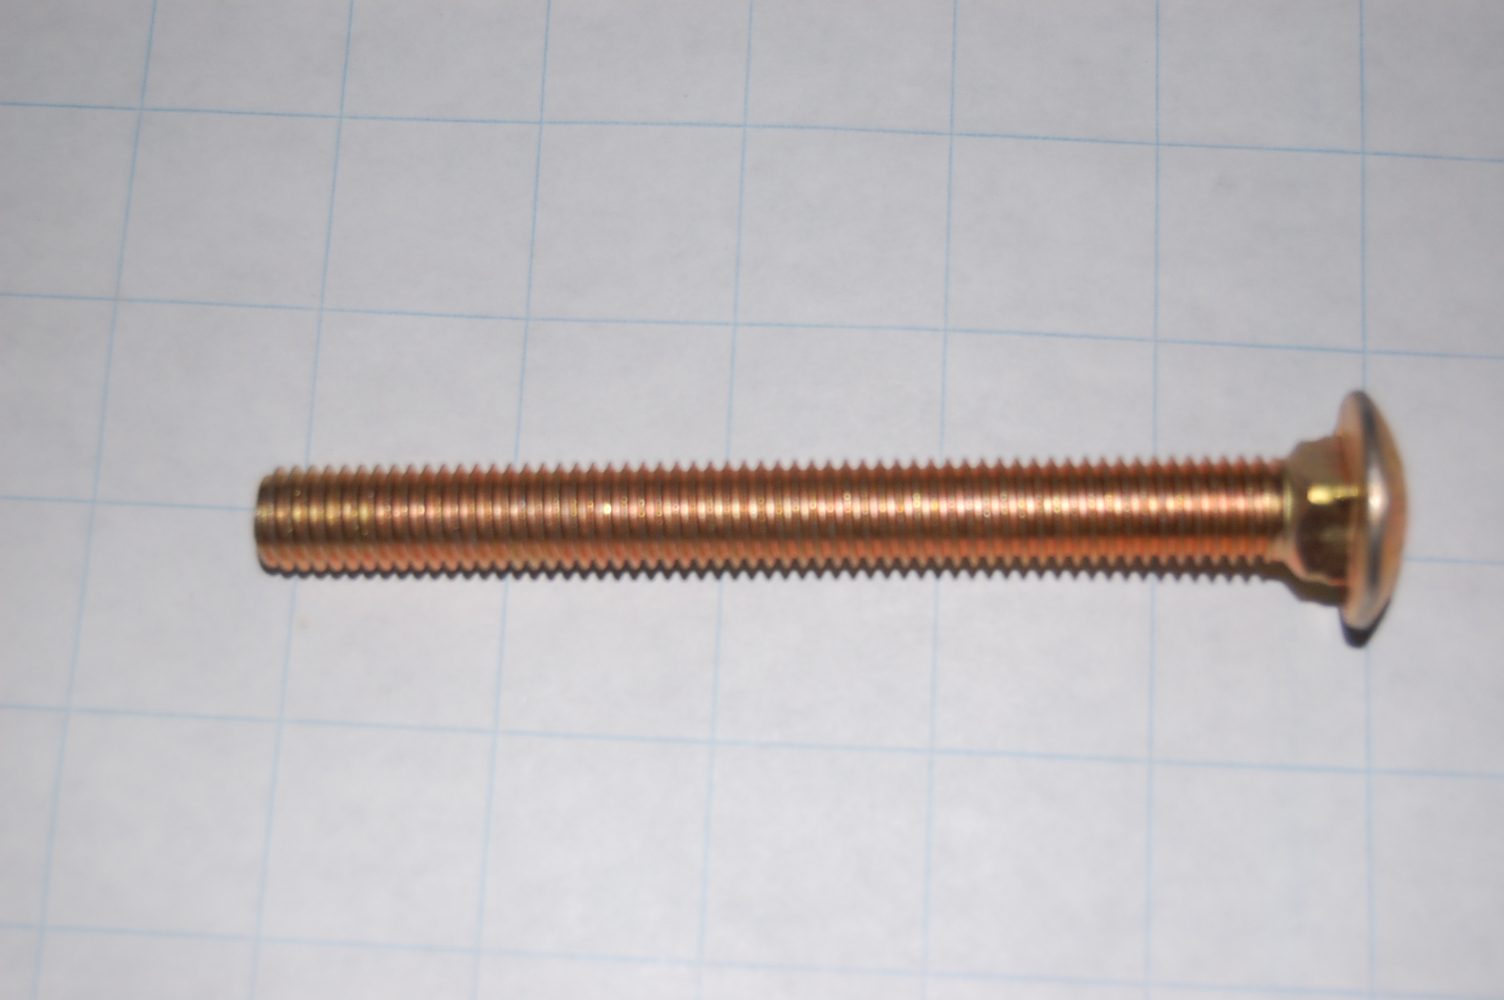 a long metal screw